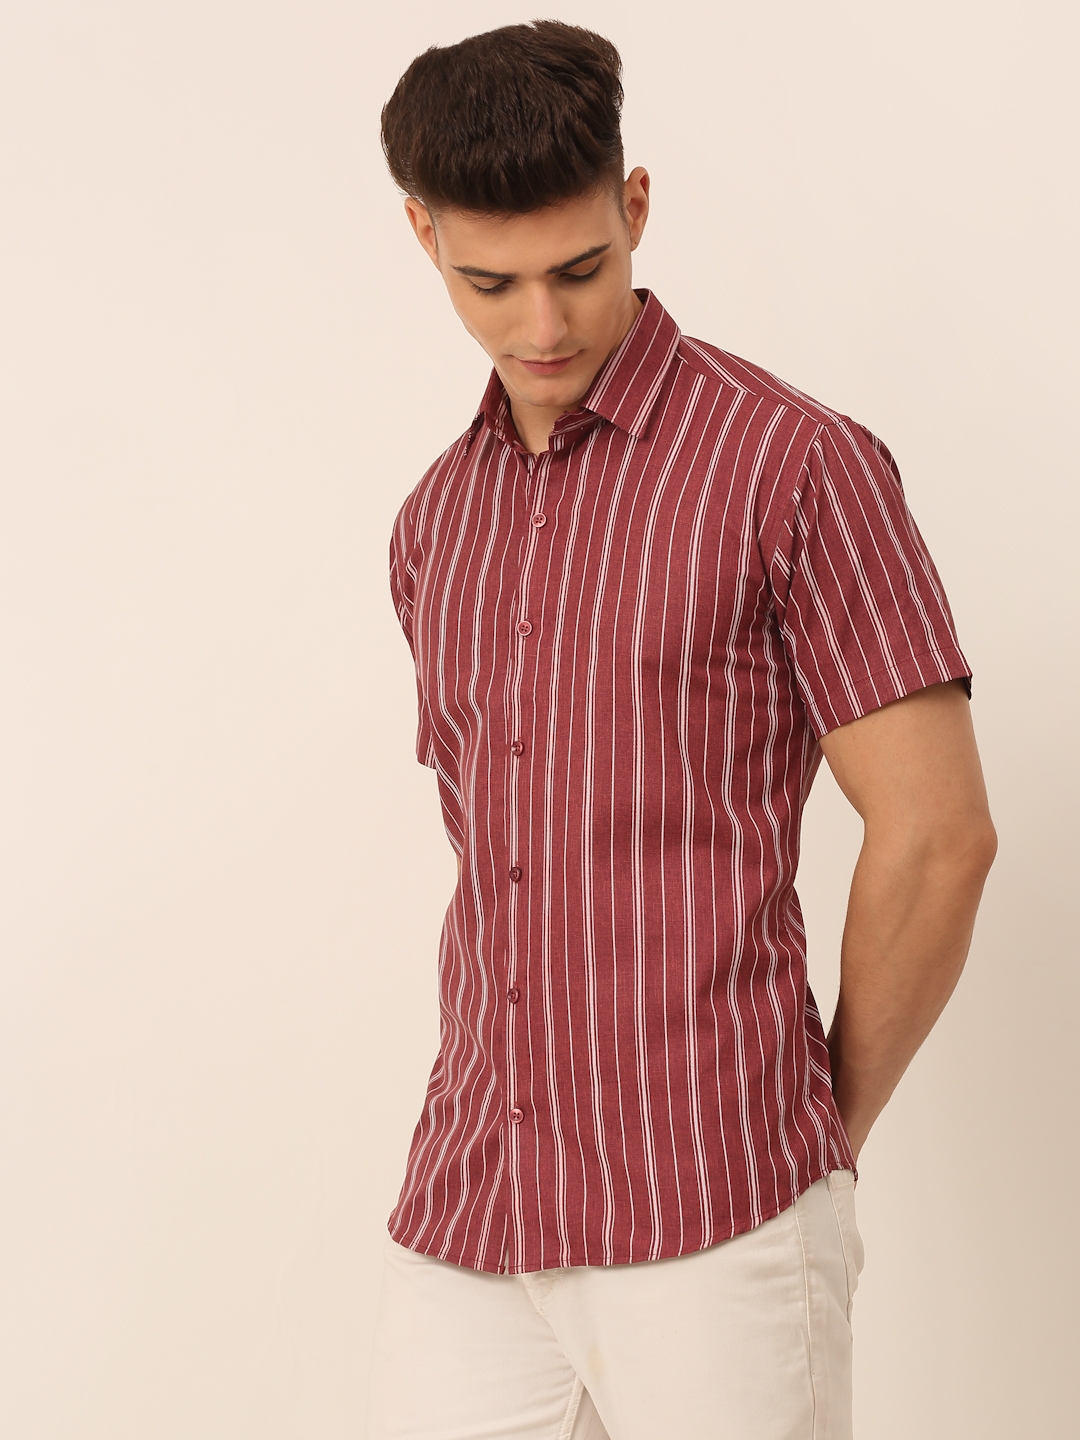 Jainish | Men's Cotton Striped Casual Shirts 1